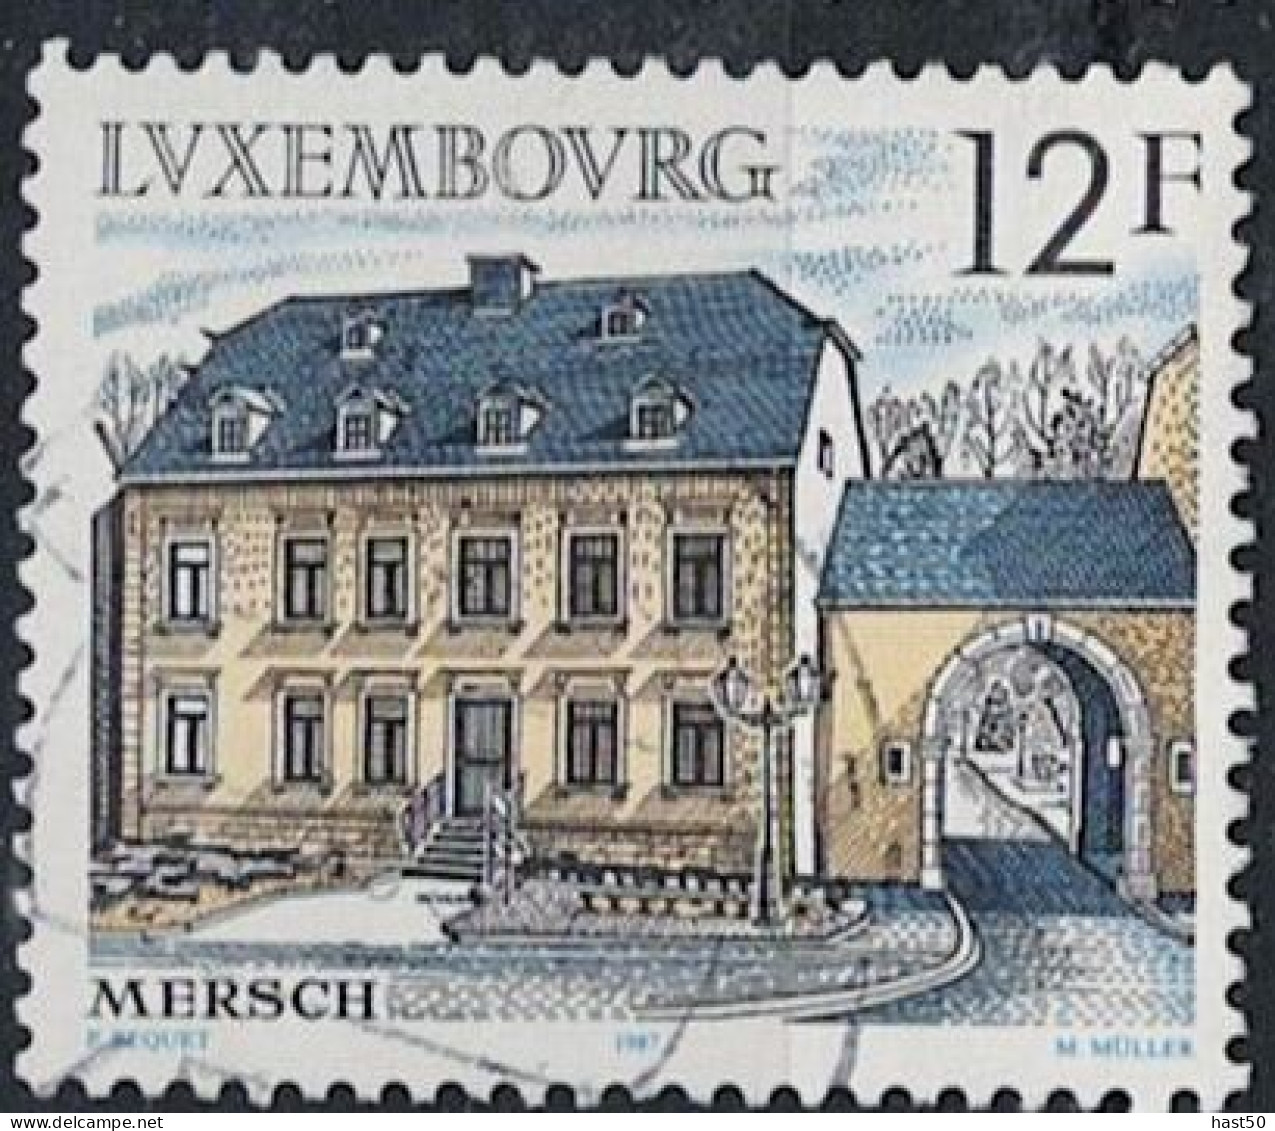 Luxemburg - Bürgerhaus, Mersch (MiNr: 1181) 1987 - Gest Used Obl - Oblitérés